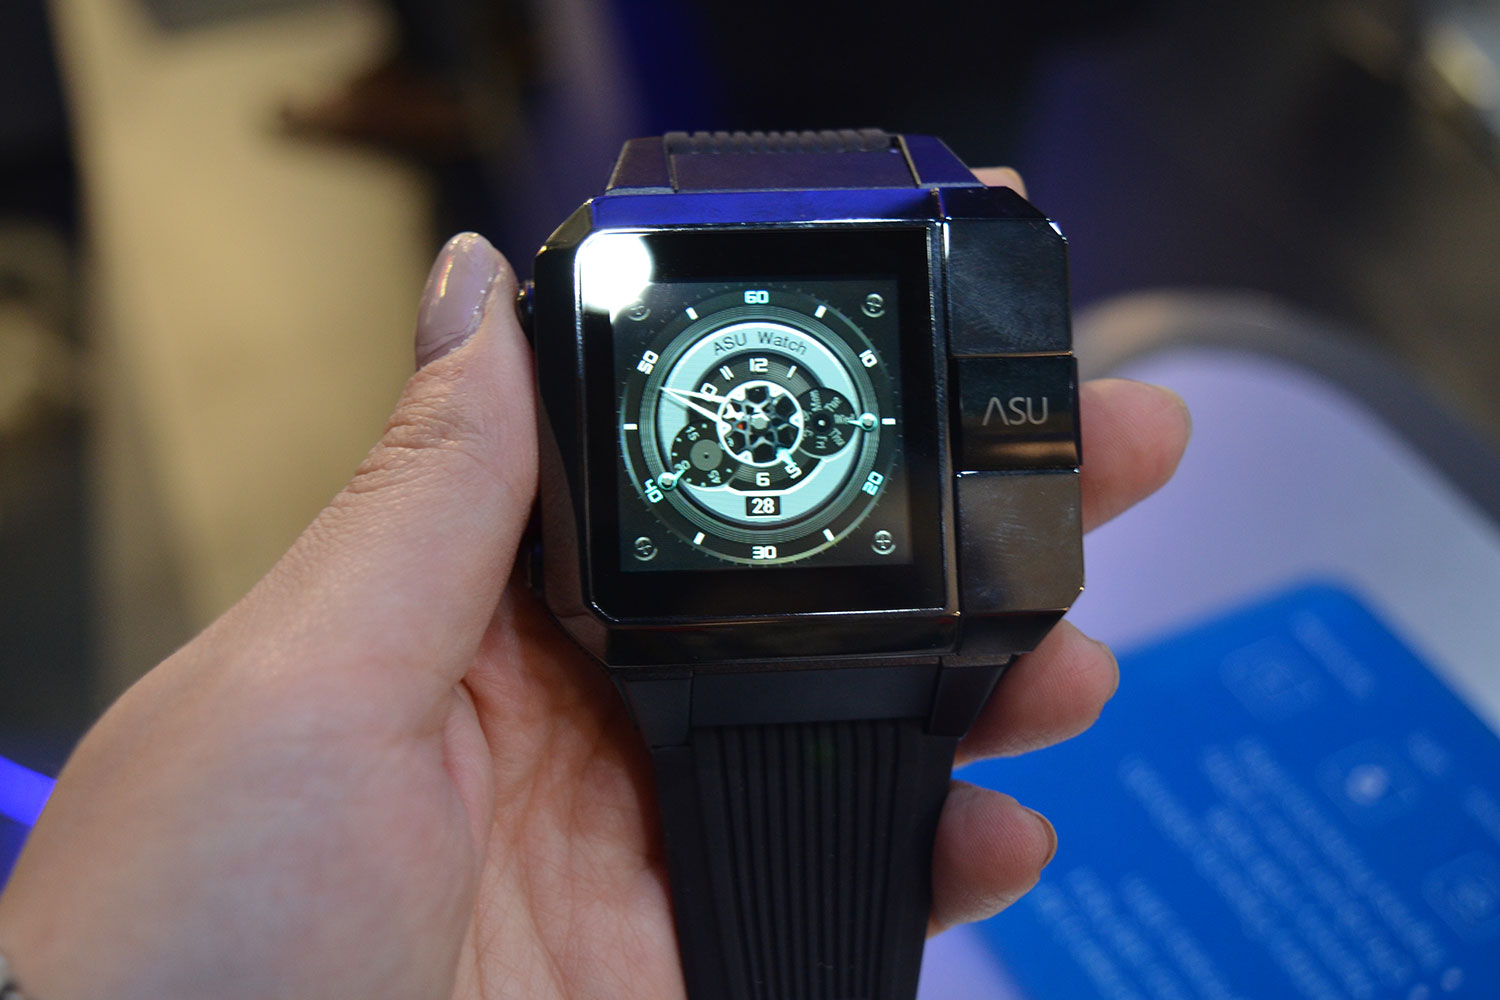 Haier Asu Smartwatch Review | Trends